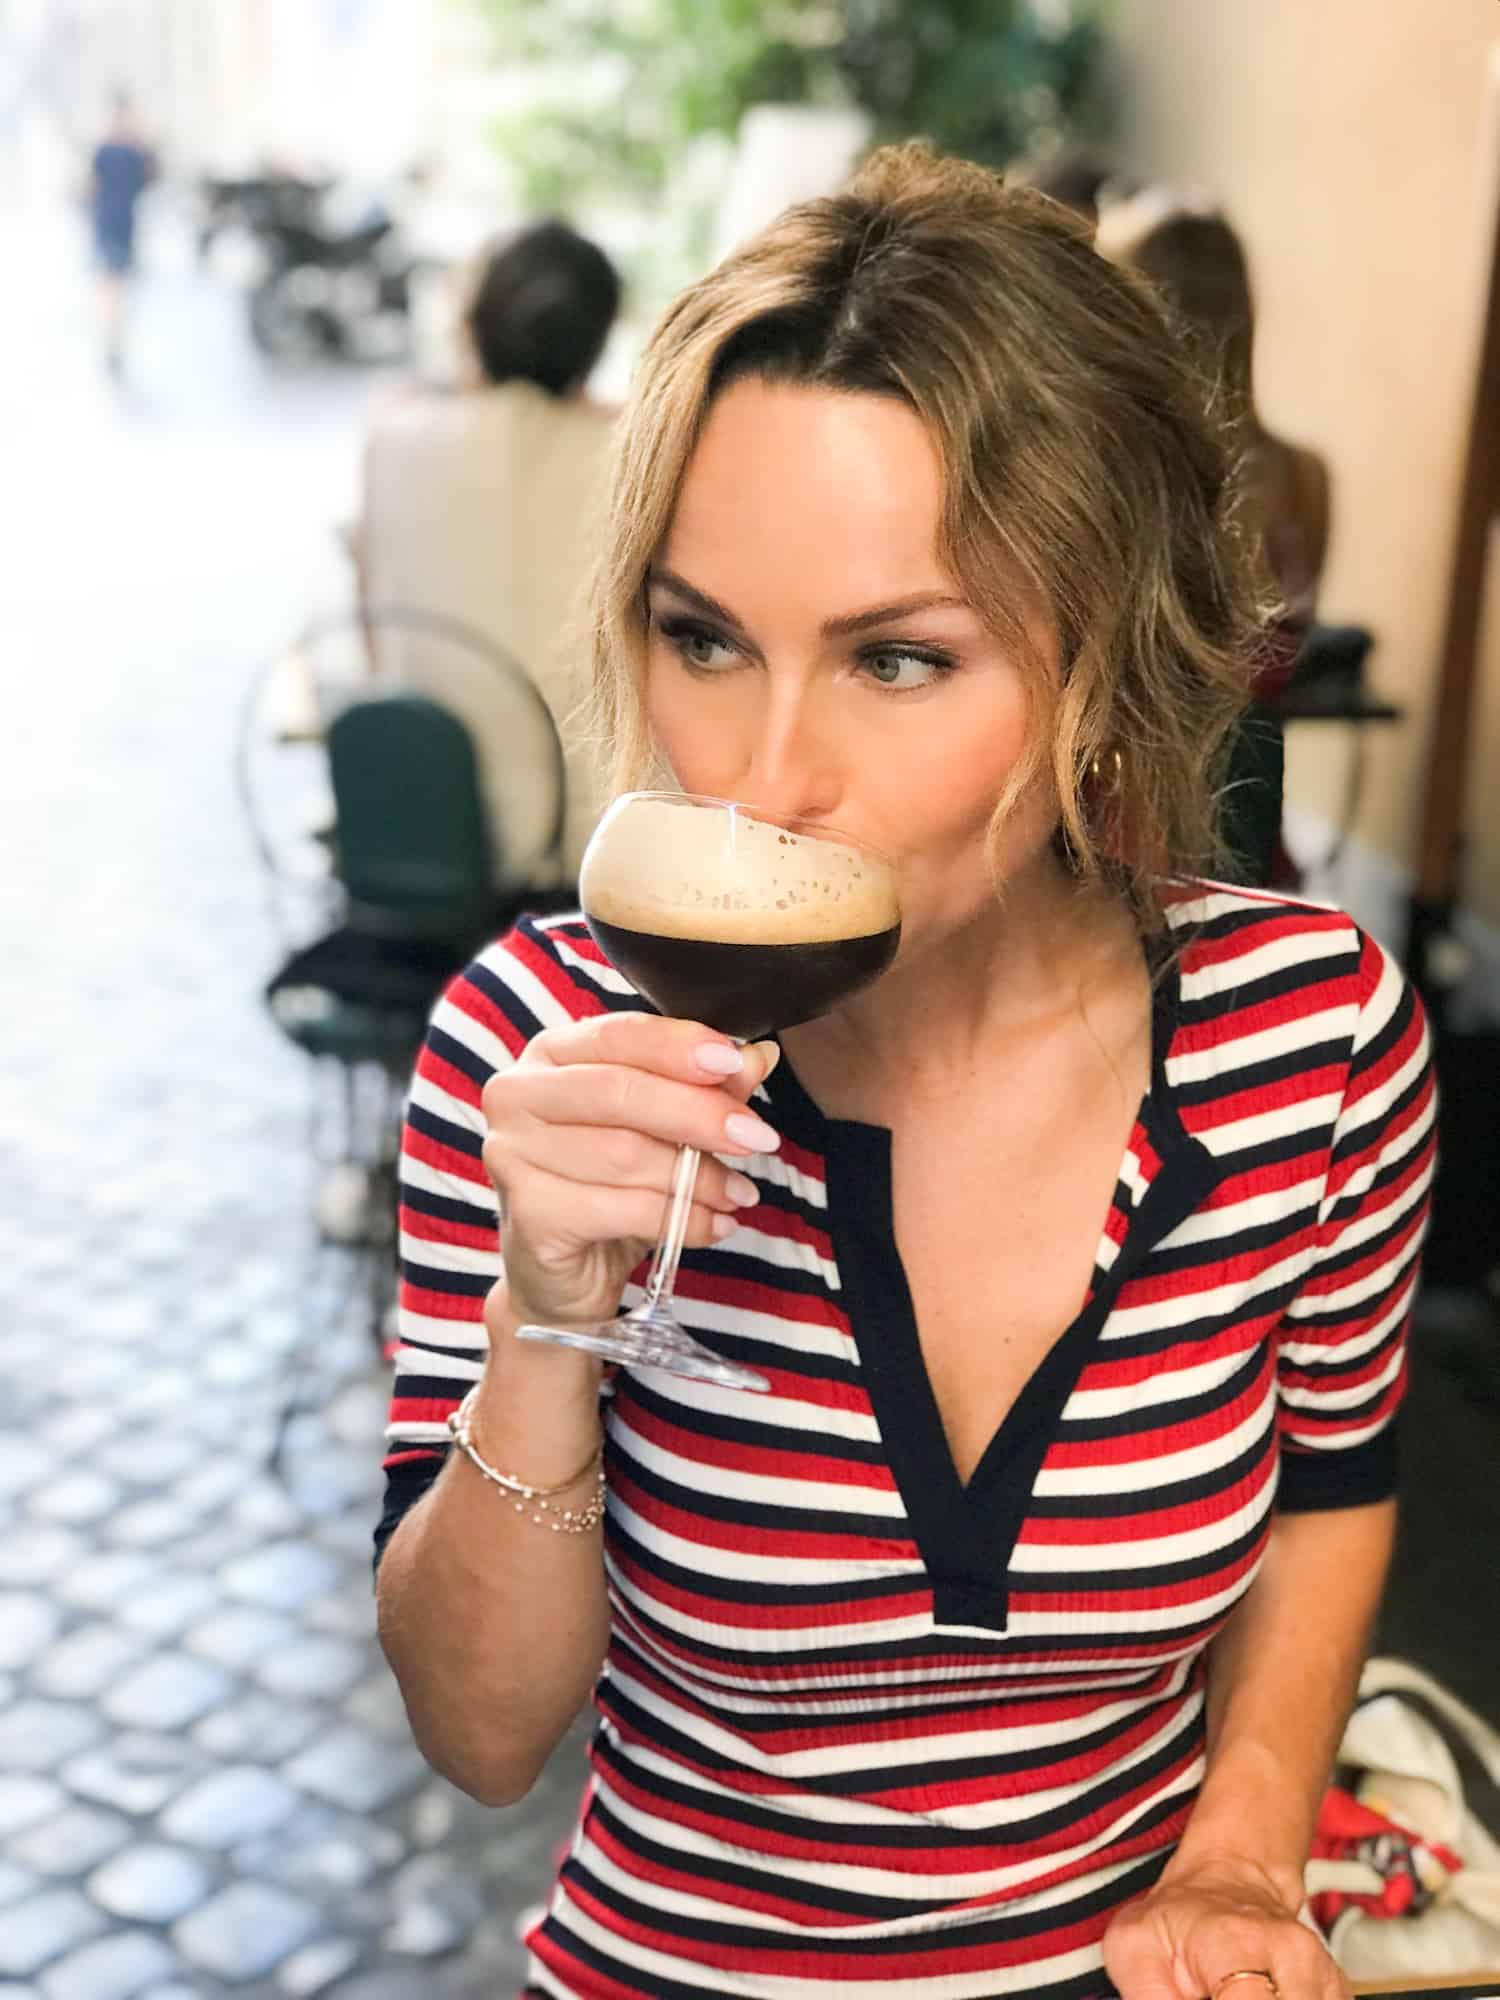 Shakerato: Italian Iced Coffee – The Travel Bite